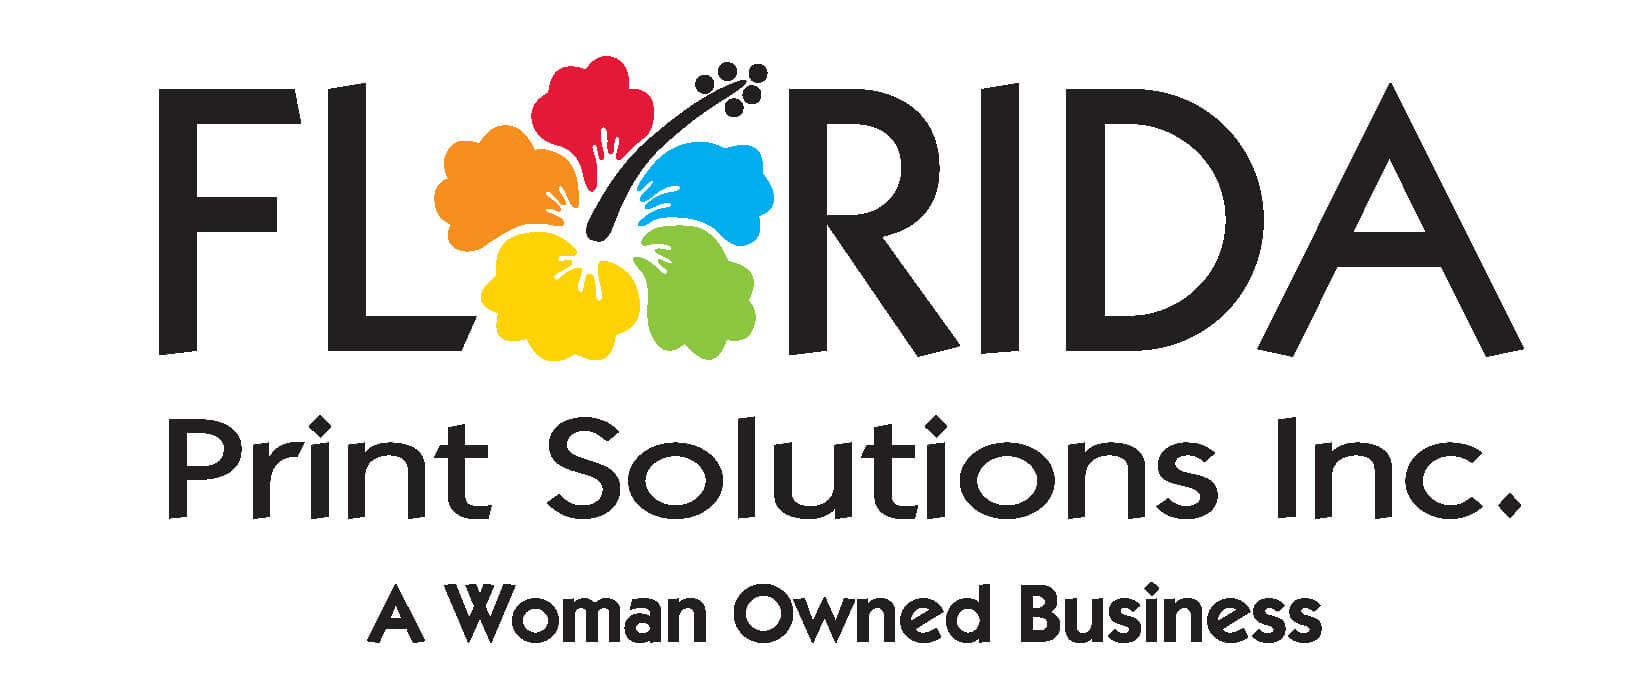 FLORIDA Print Solutions WOB